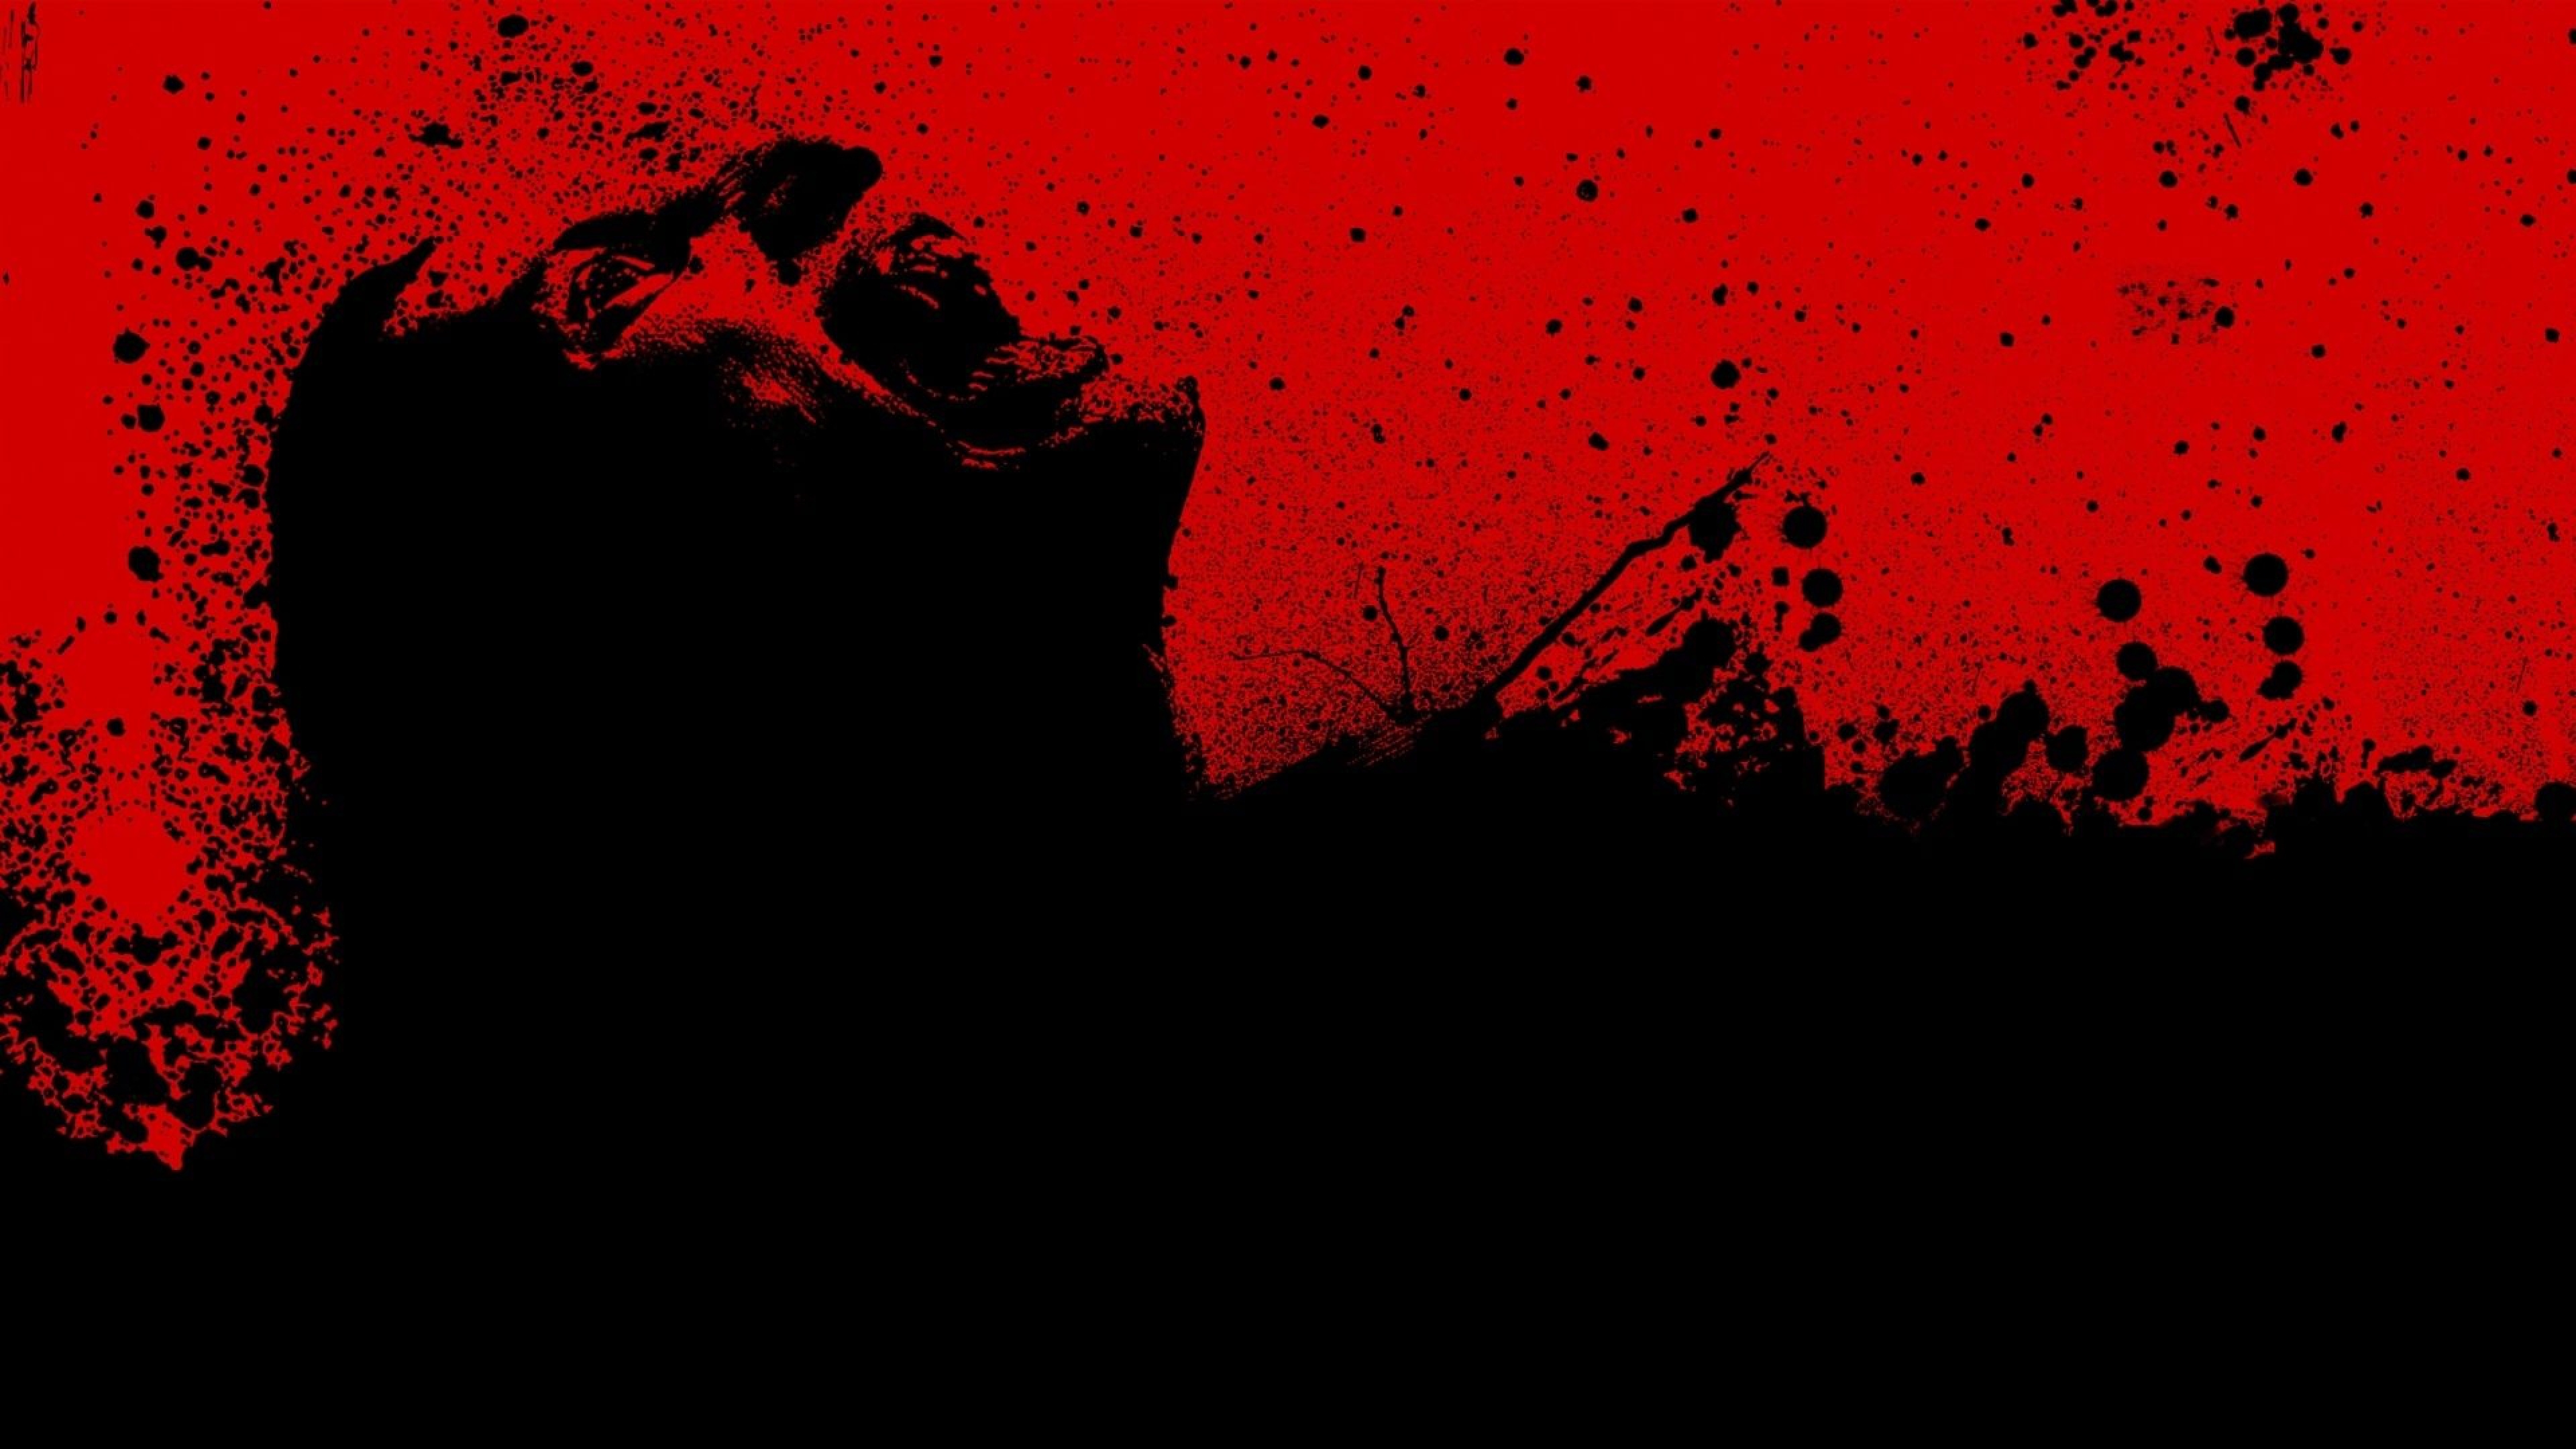 Free download 30 days of night Red Black Blood Wallpaper Background 4K